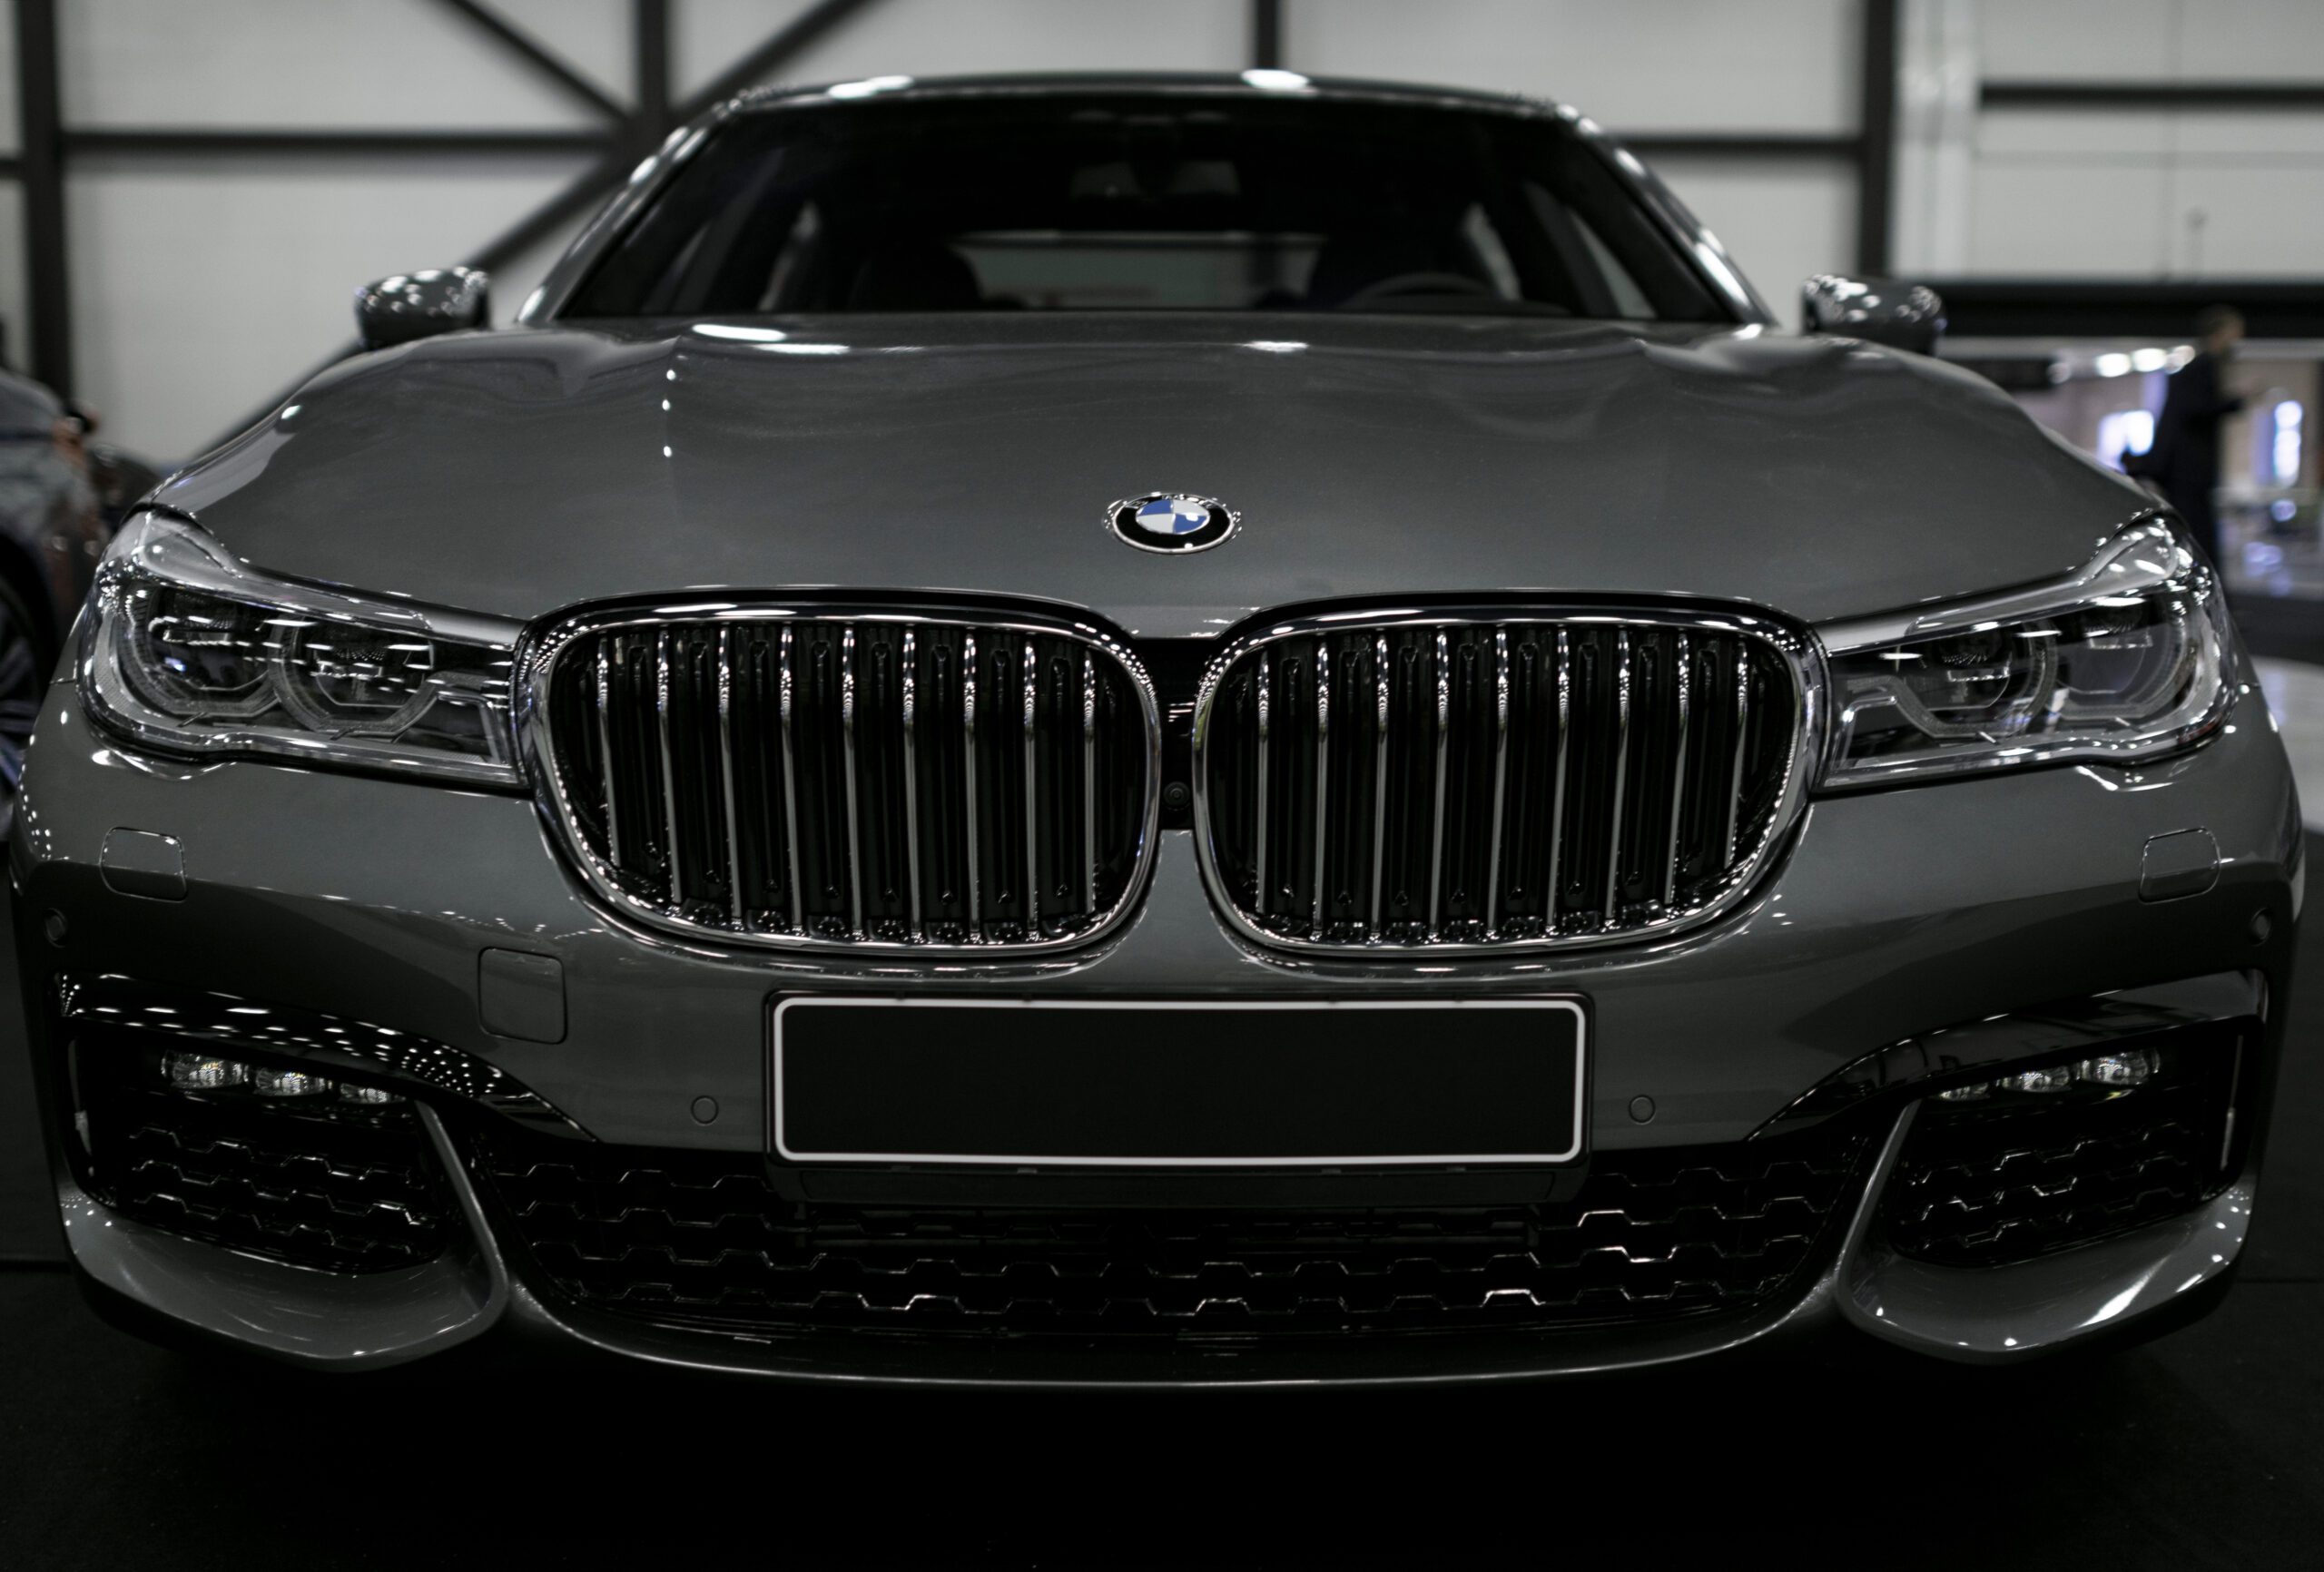 A class action lawsuit alleges that certain BMW vehicles consume excessive engine oil. 